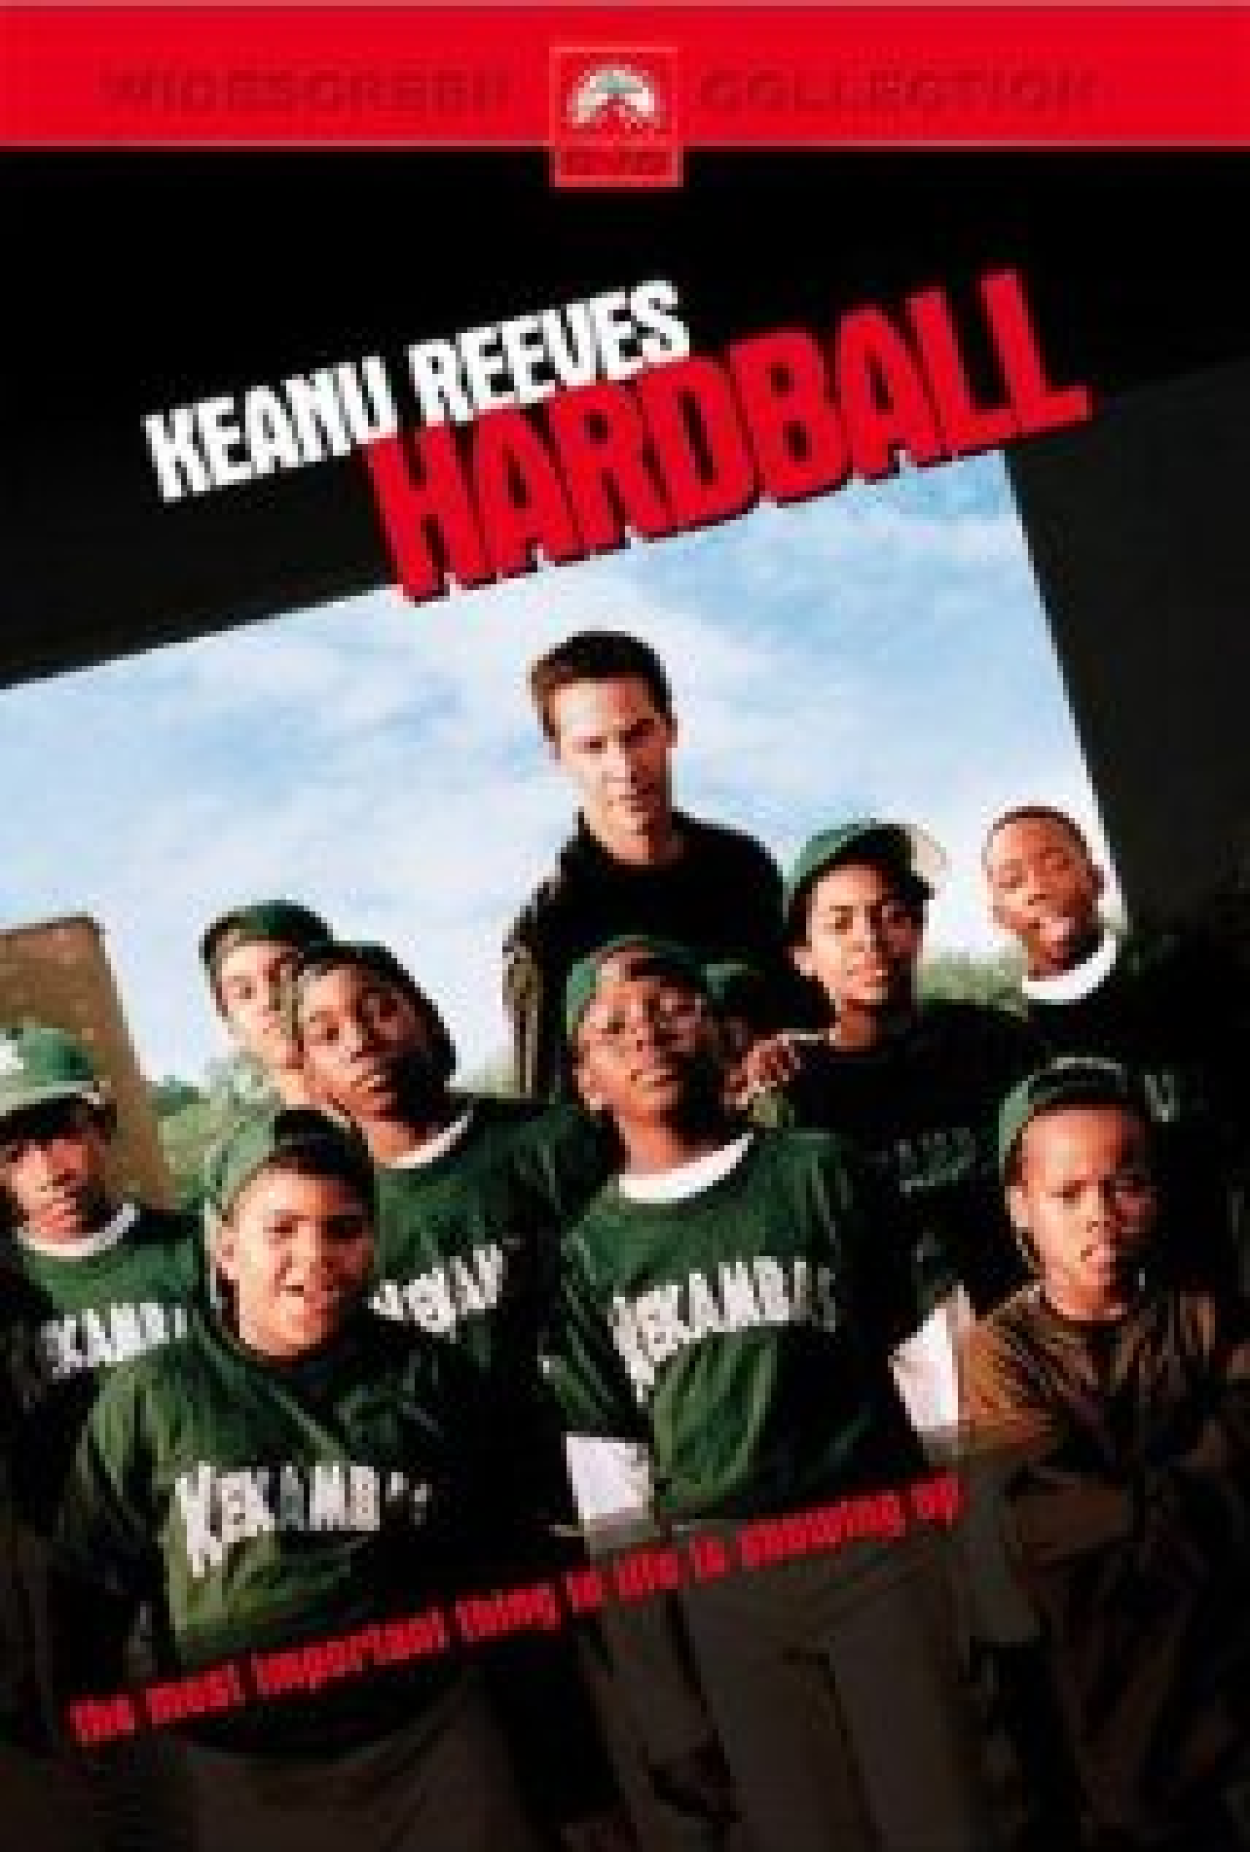 Hardball - O Jogo da Vida - Filme 2001 - AdoroCinema